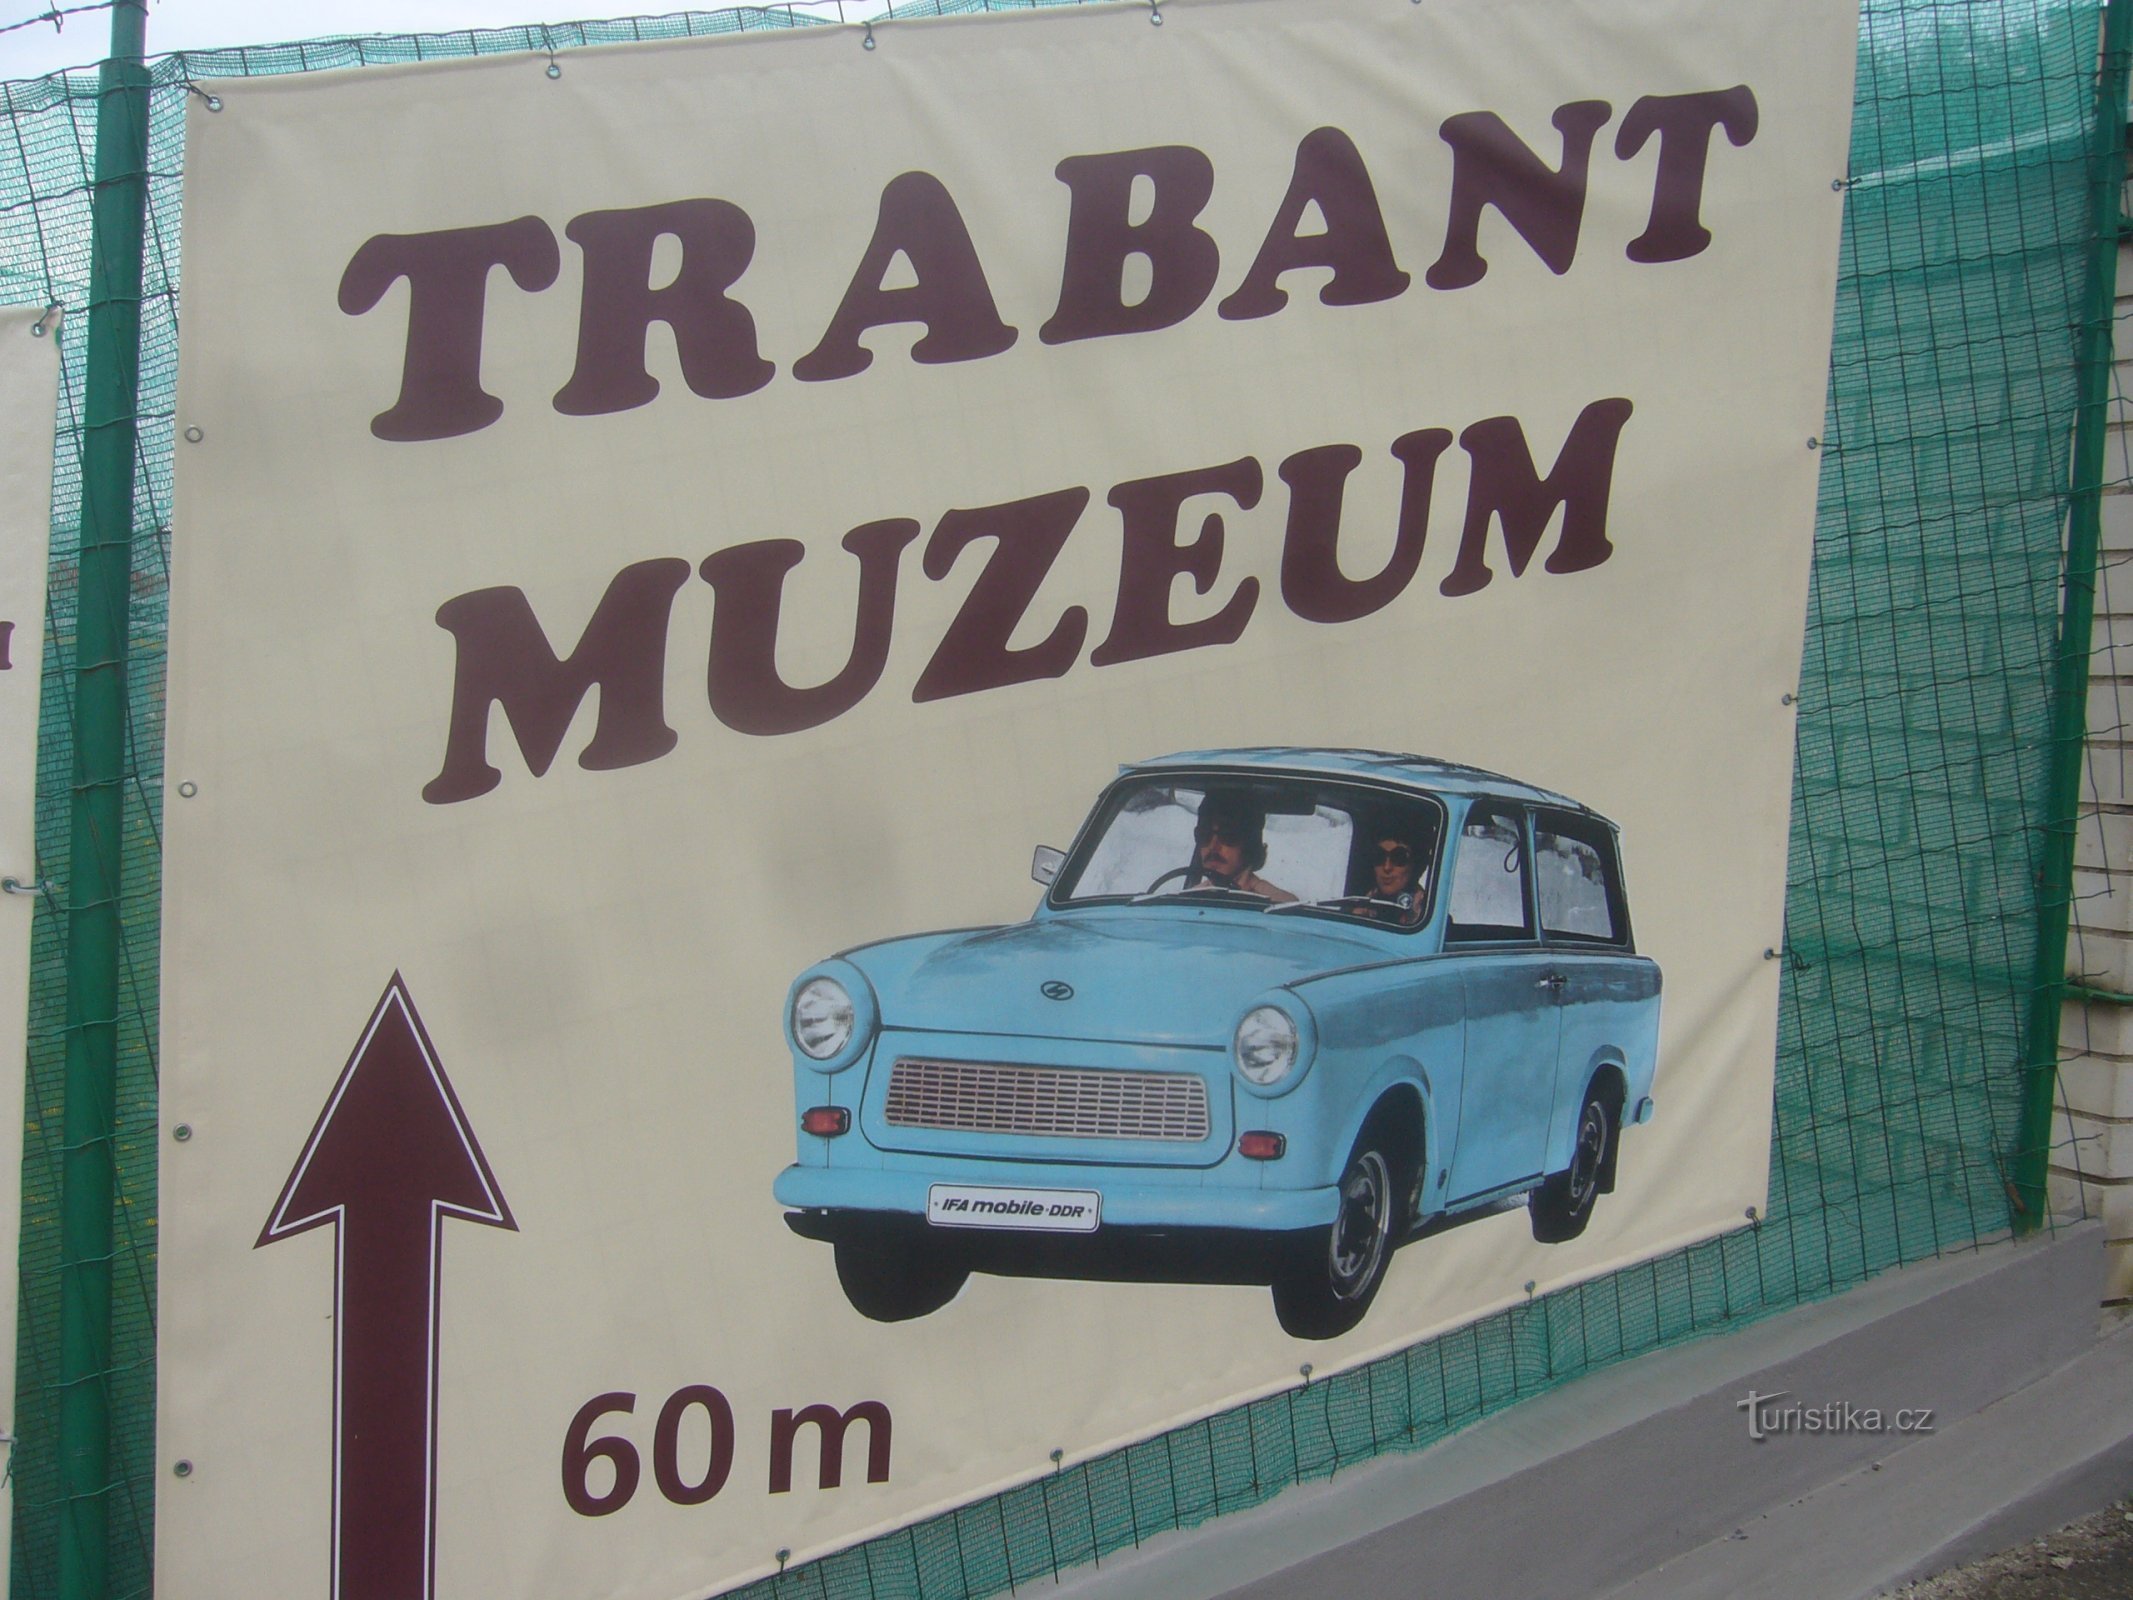 Museu Trabant Motol